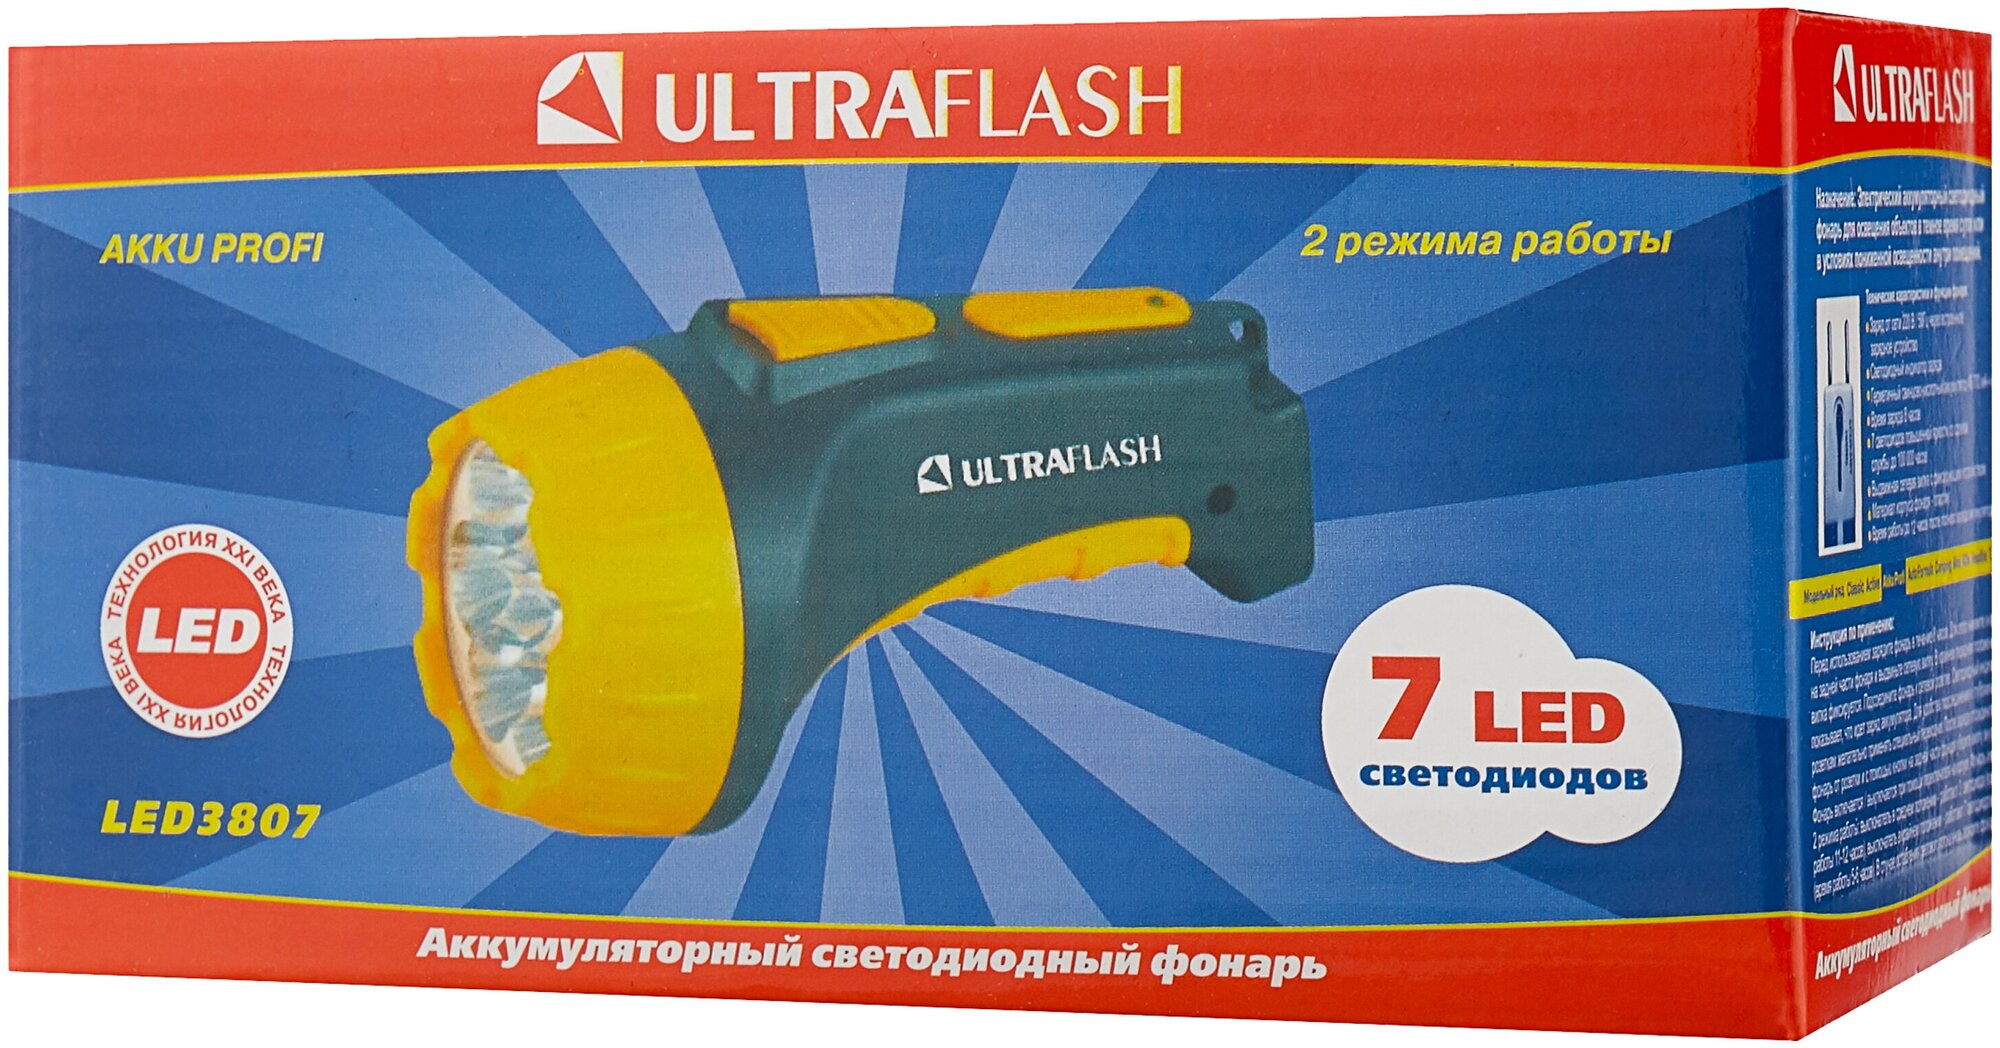 Аккумуляторный фонарик Ultraflash - фото №3